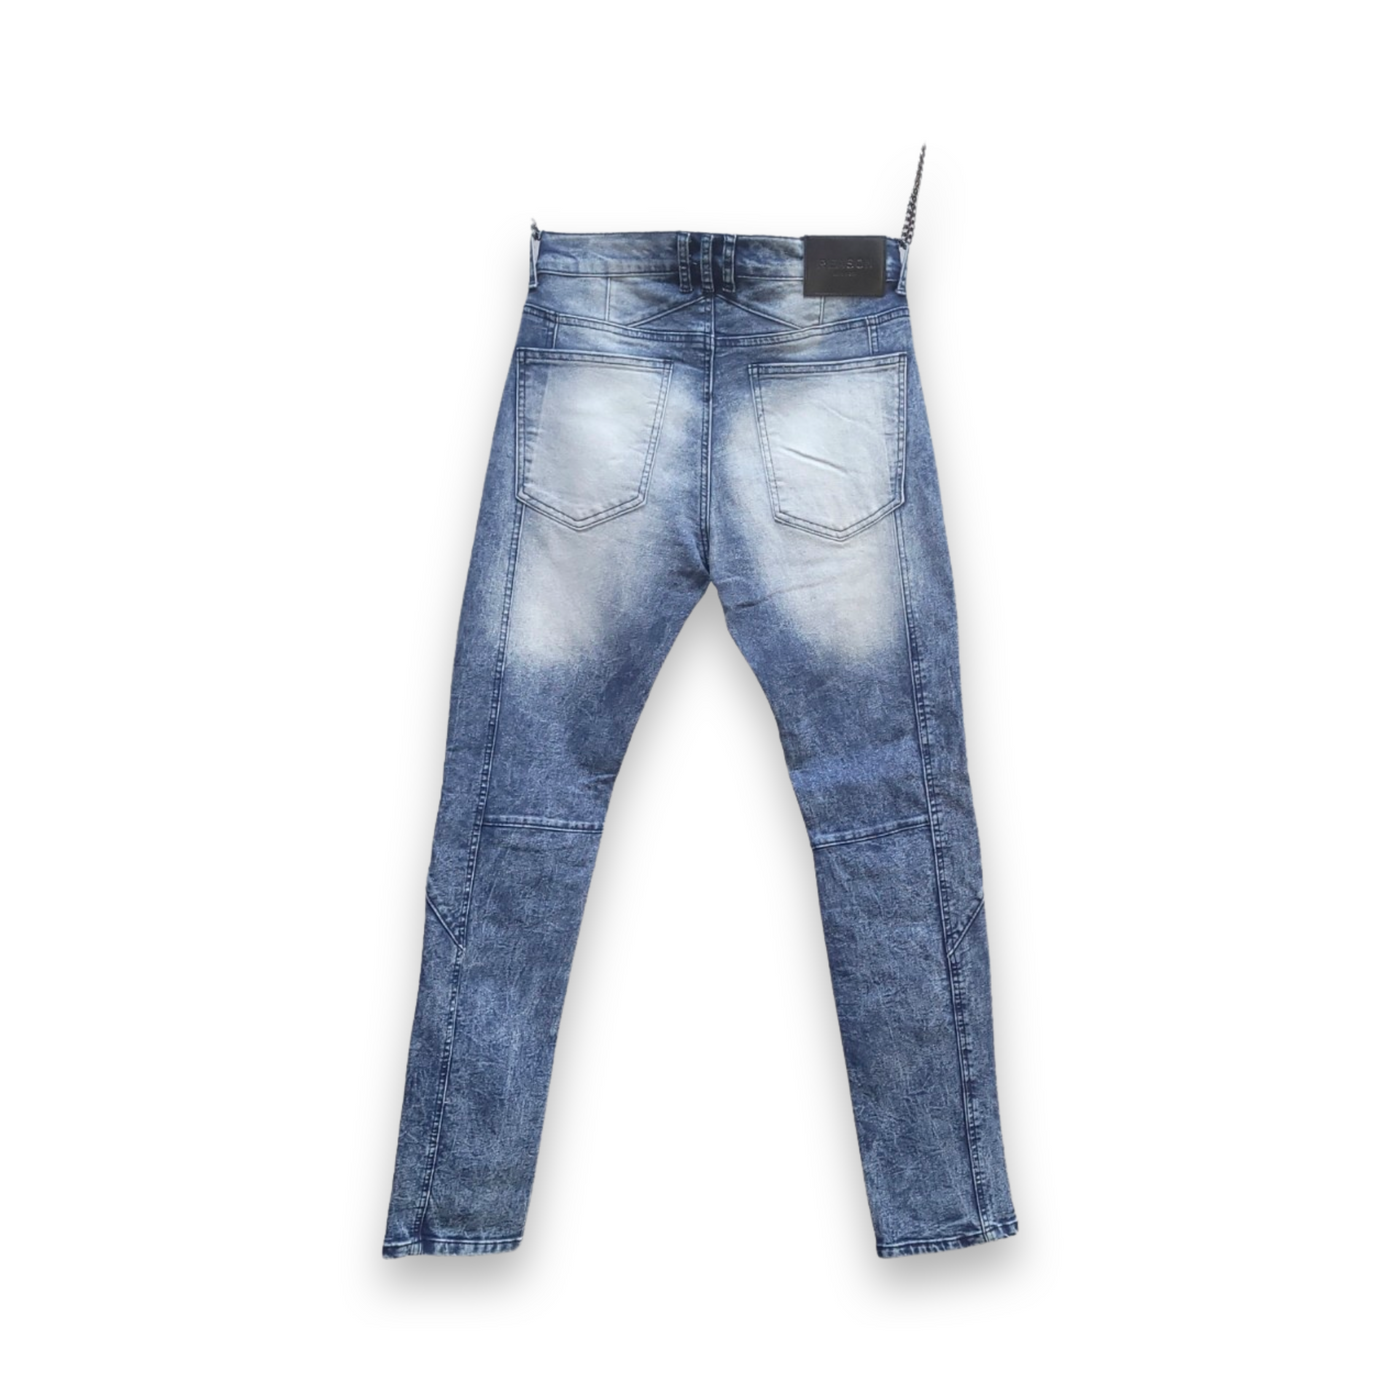 DMR003 Reason Premium Denim Fit Jeans